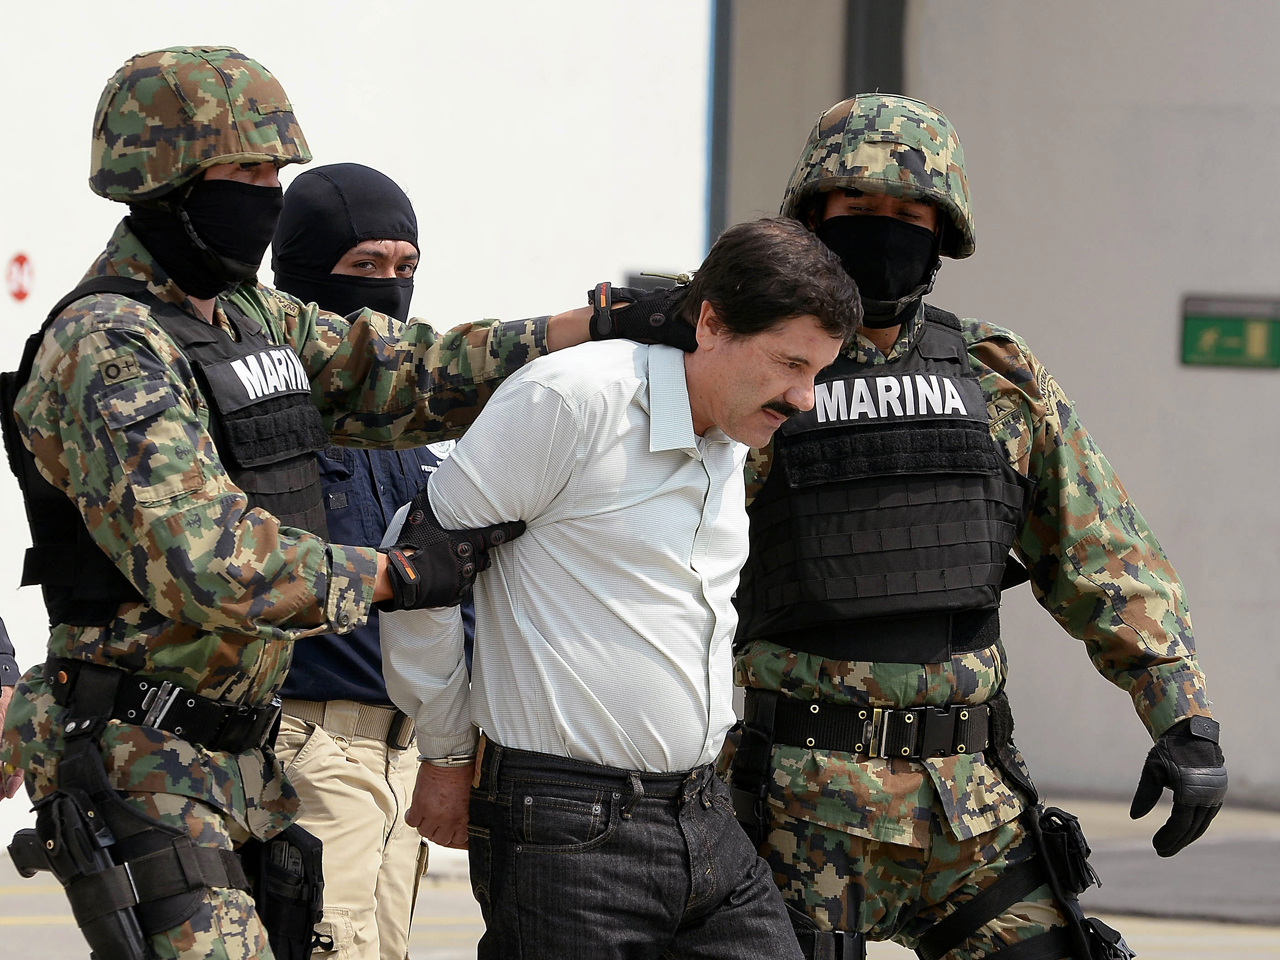 Joaquin ‘El Chapo’ Guzman found guilty of smuggling narcotics in U.S.